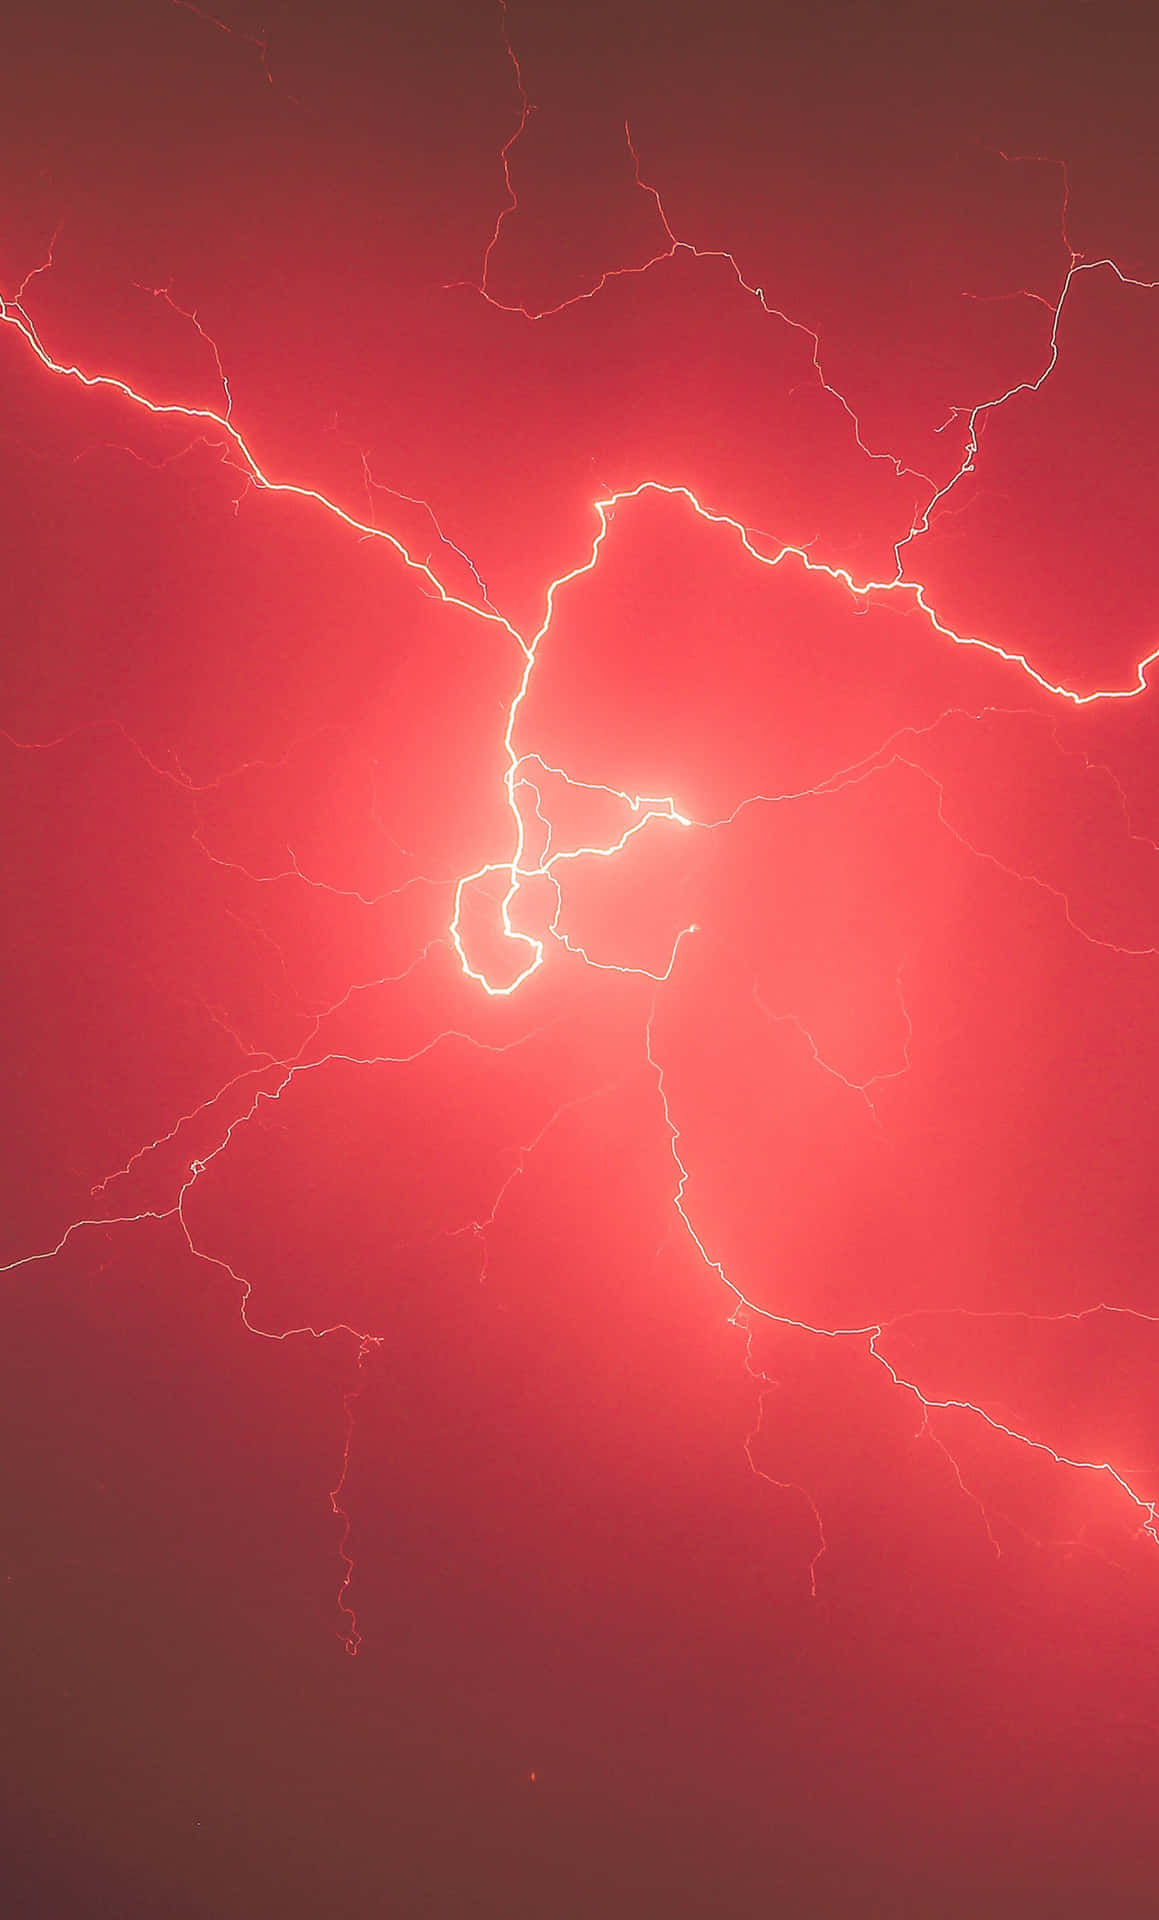 Breathtaking Red Lightning Strikes Wallpaper